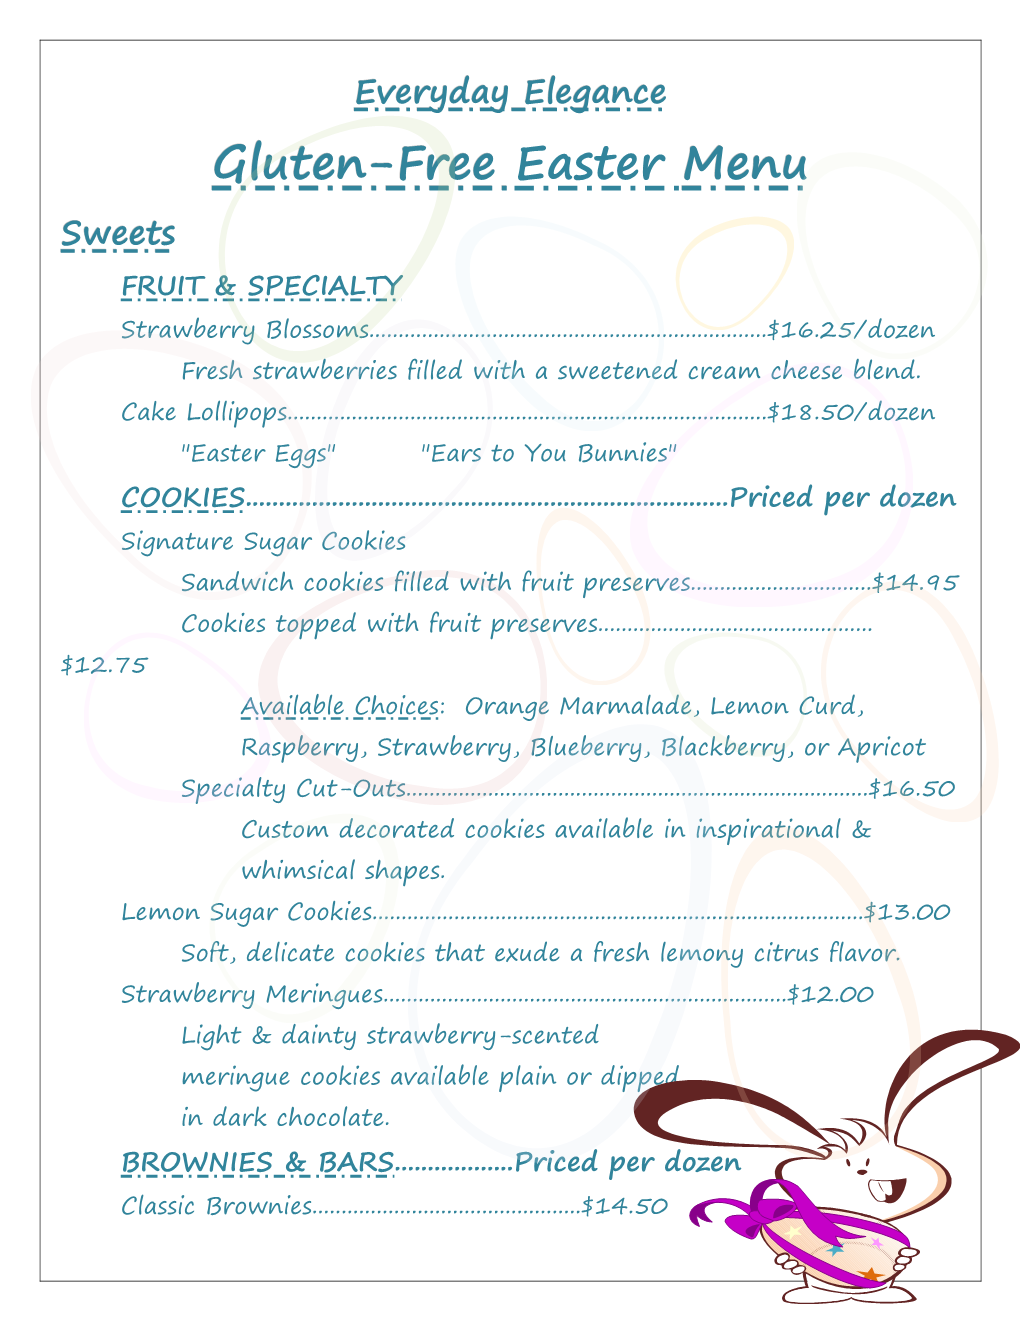 Gluten-Free Easter Menu